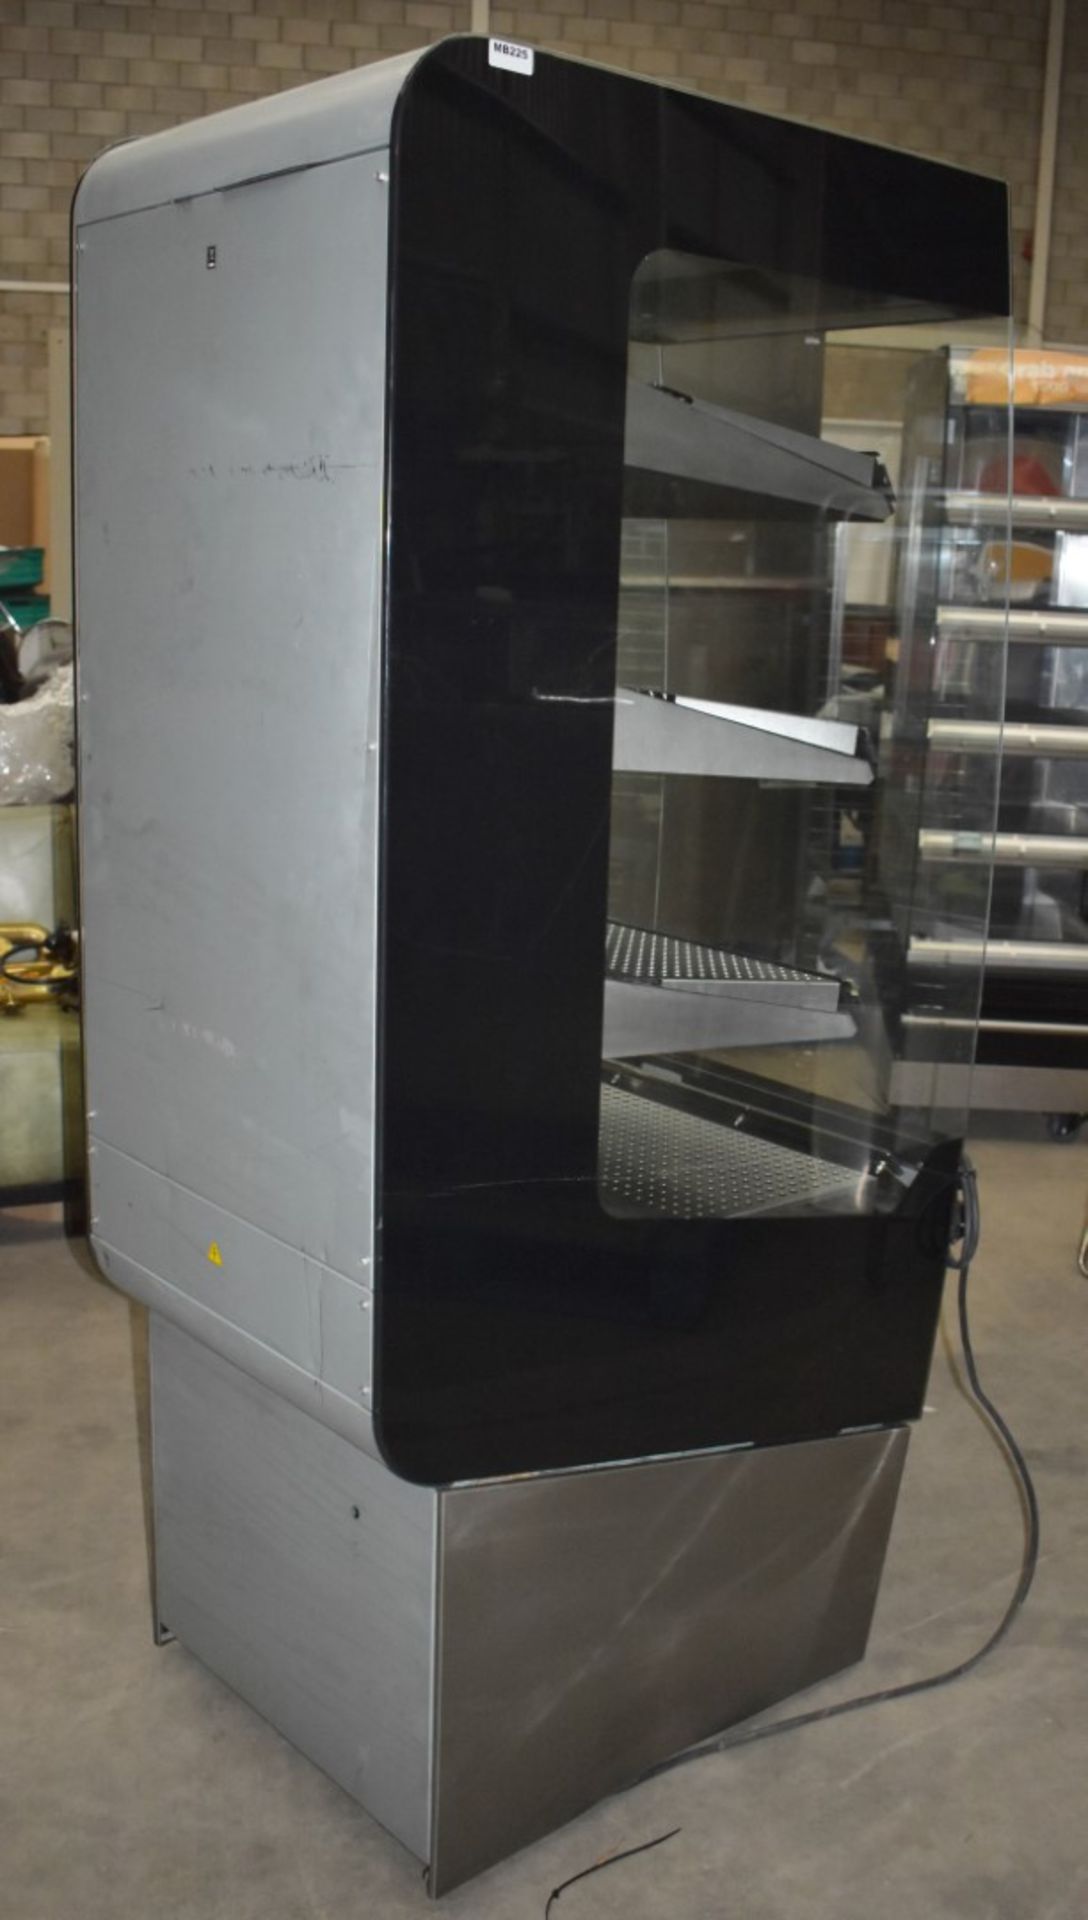 1 x Fri-Jado Four Tier Multi Deck Hot Food Warmer Heated Display Unit - Model MD60 - Contemporary - Image 12 of 12